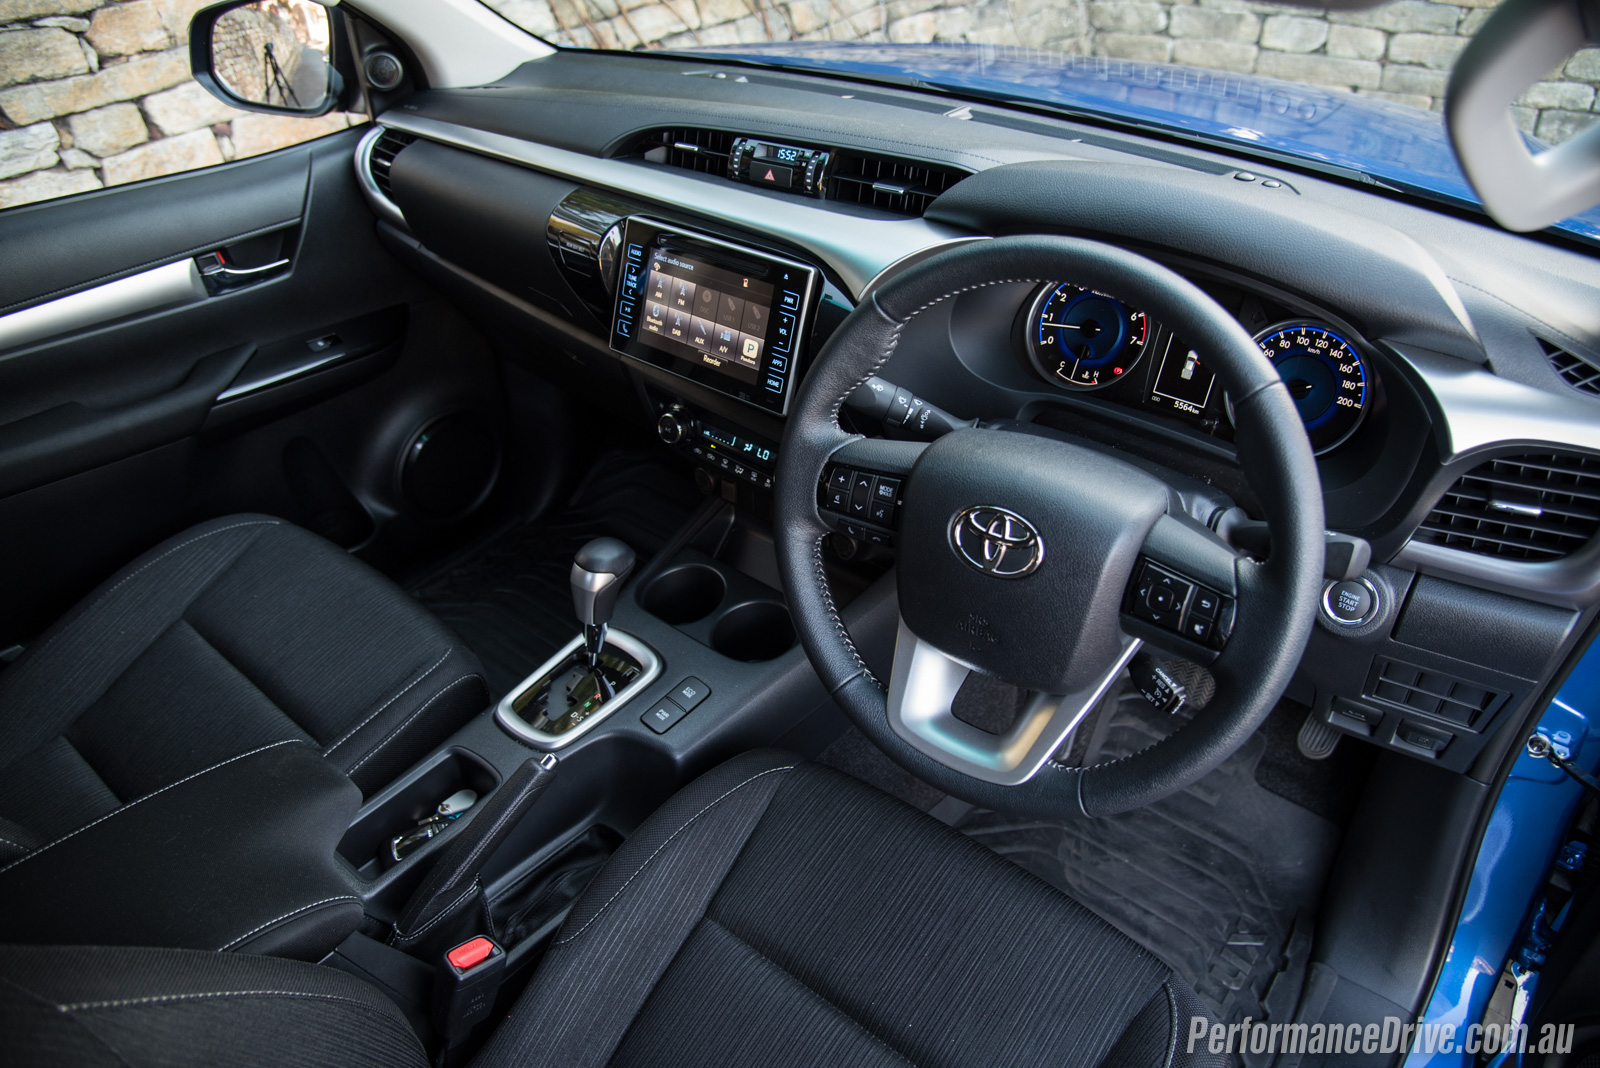 2016 Toyota Hilux Sr5 V6 Review Video Performancedrive